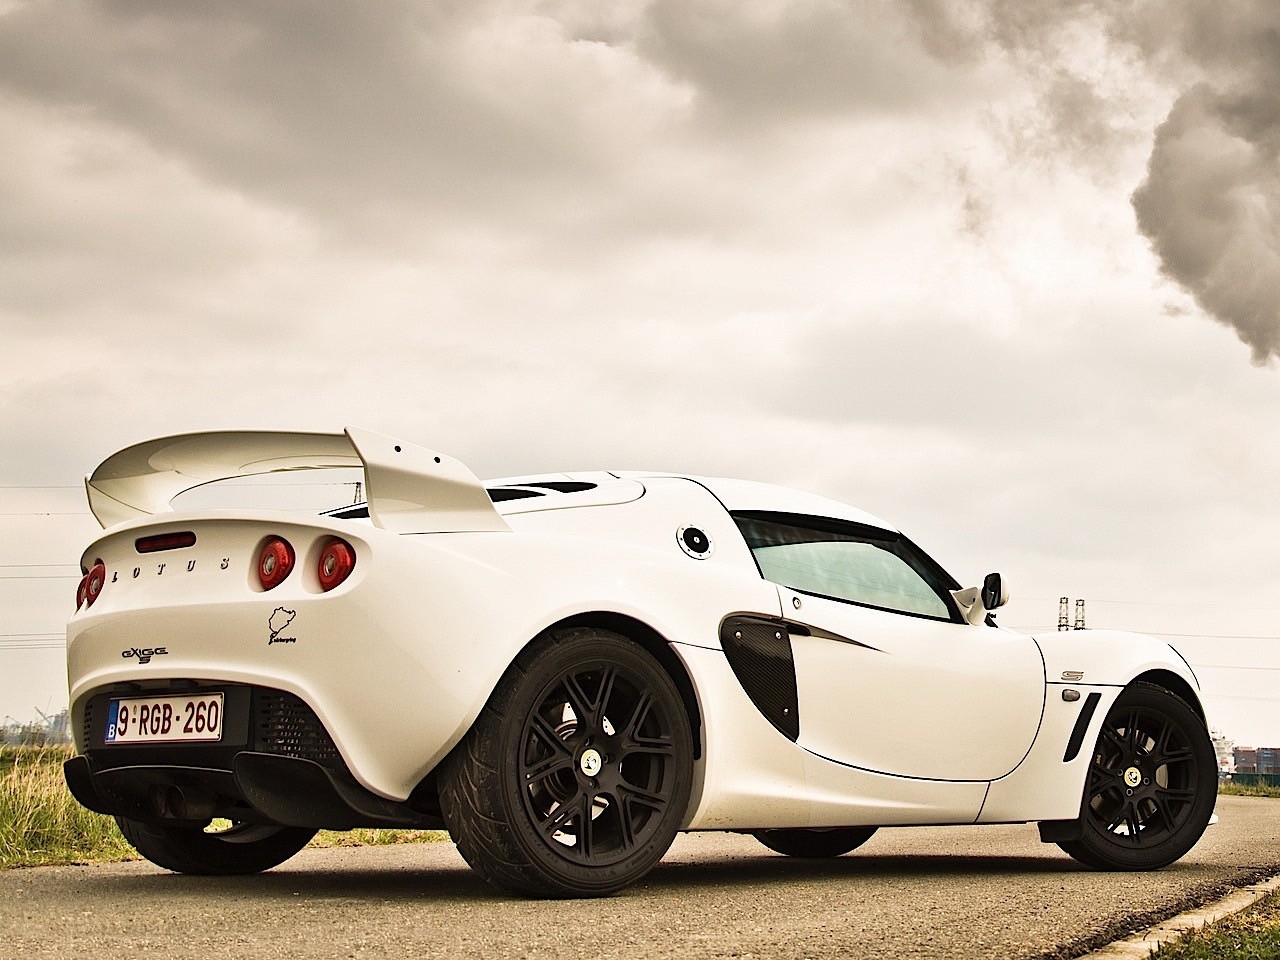 Lotus Exige 2009 car price, specs, images, installment schedule, review |  Wapcar.my